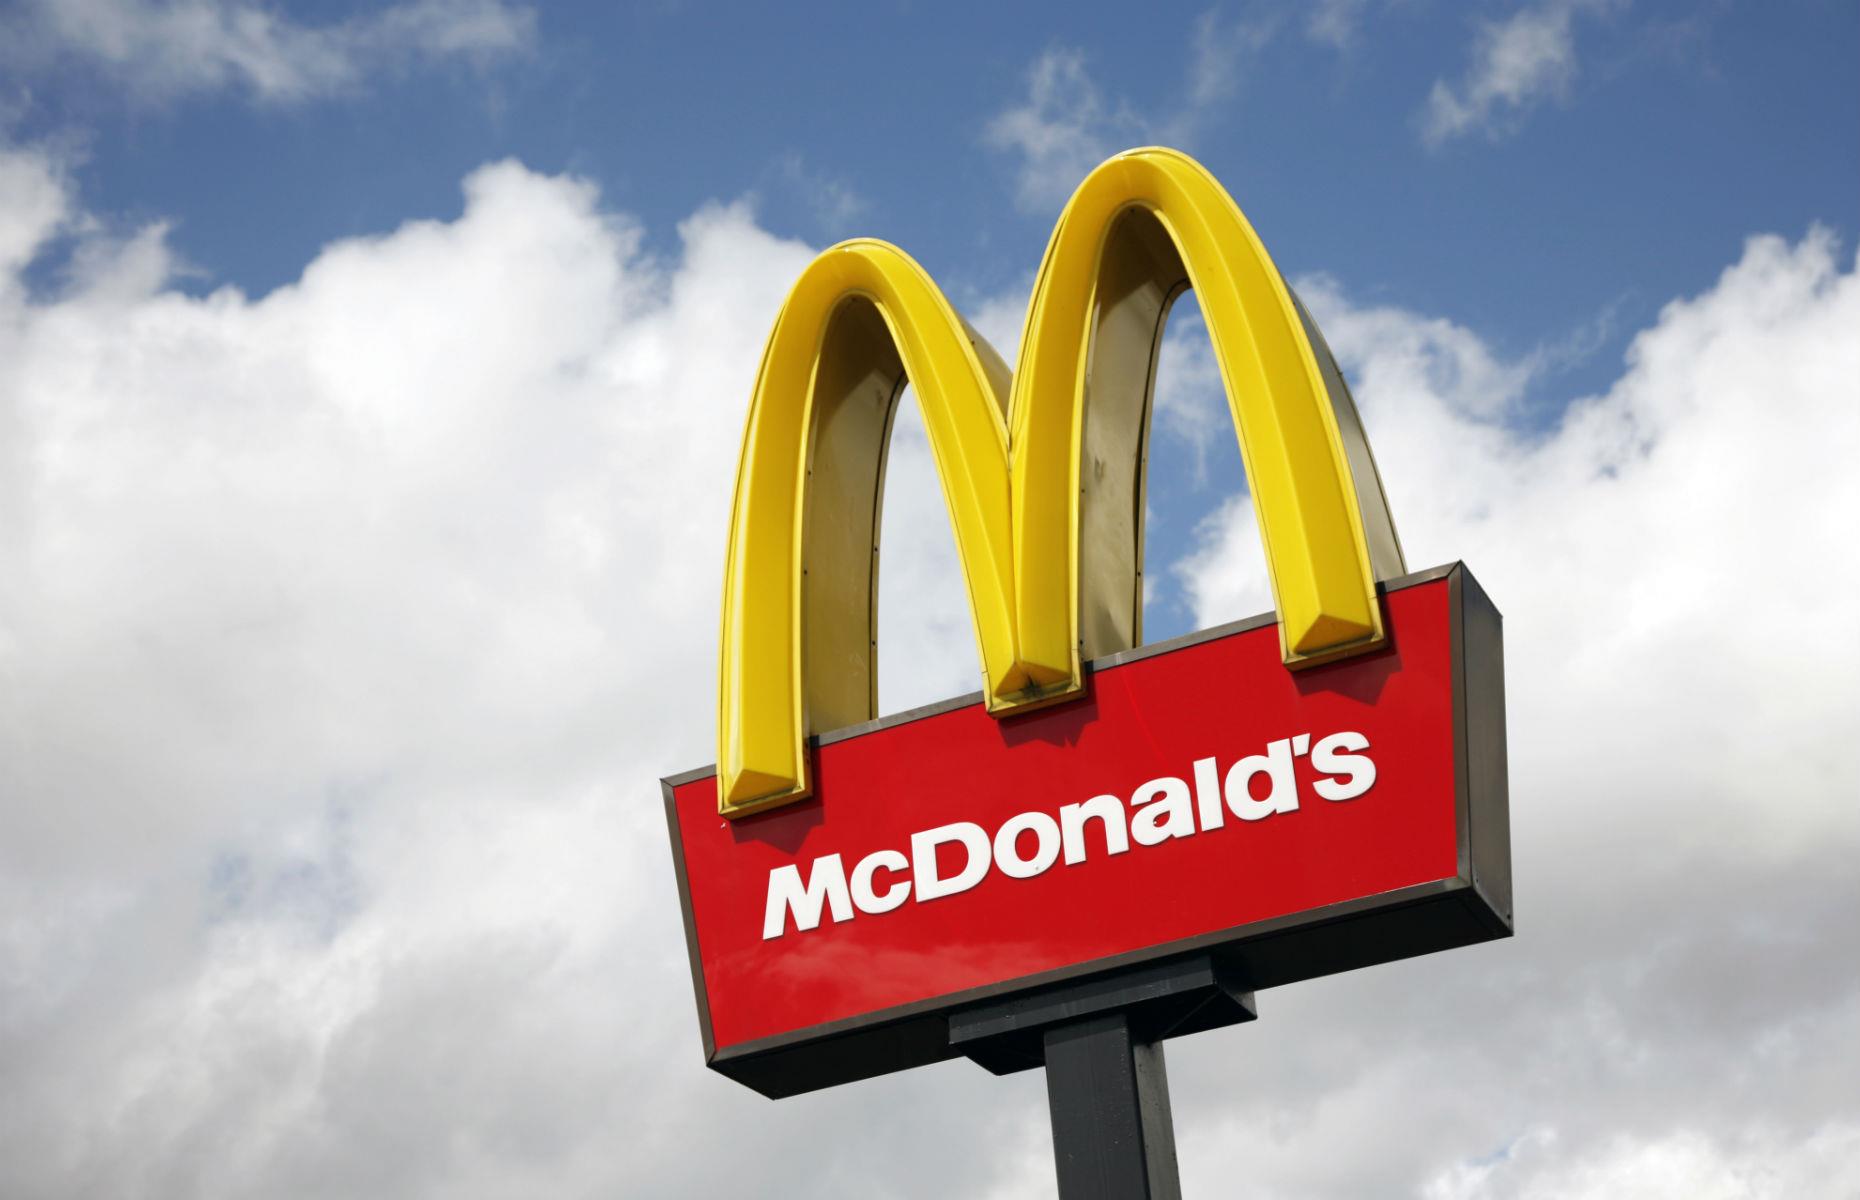 Rupesh's first job at McDonald's paid £4 per hour